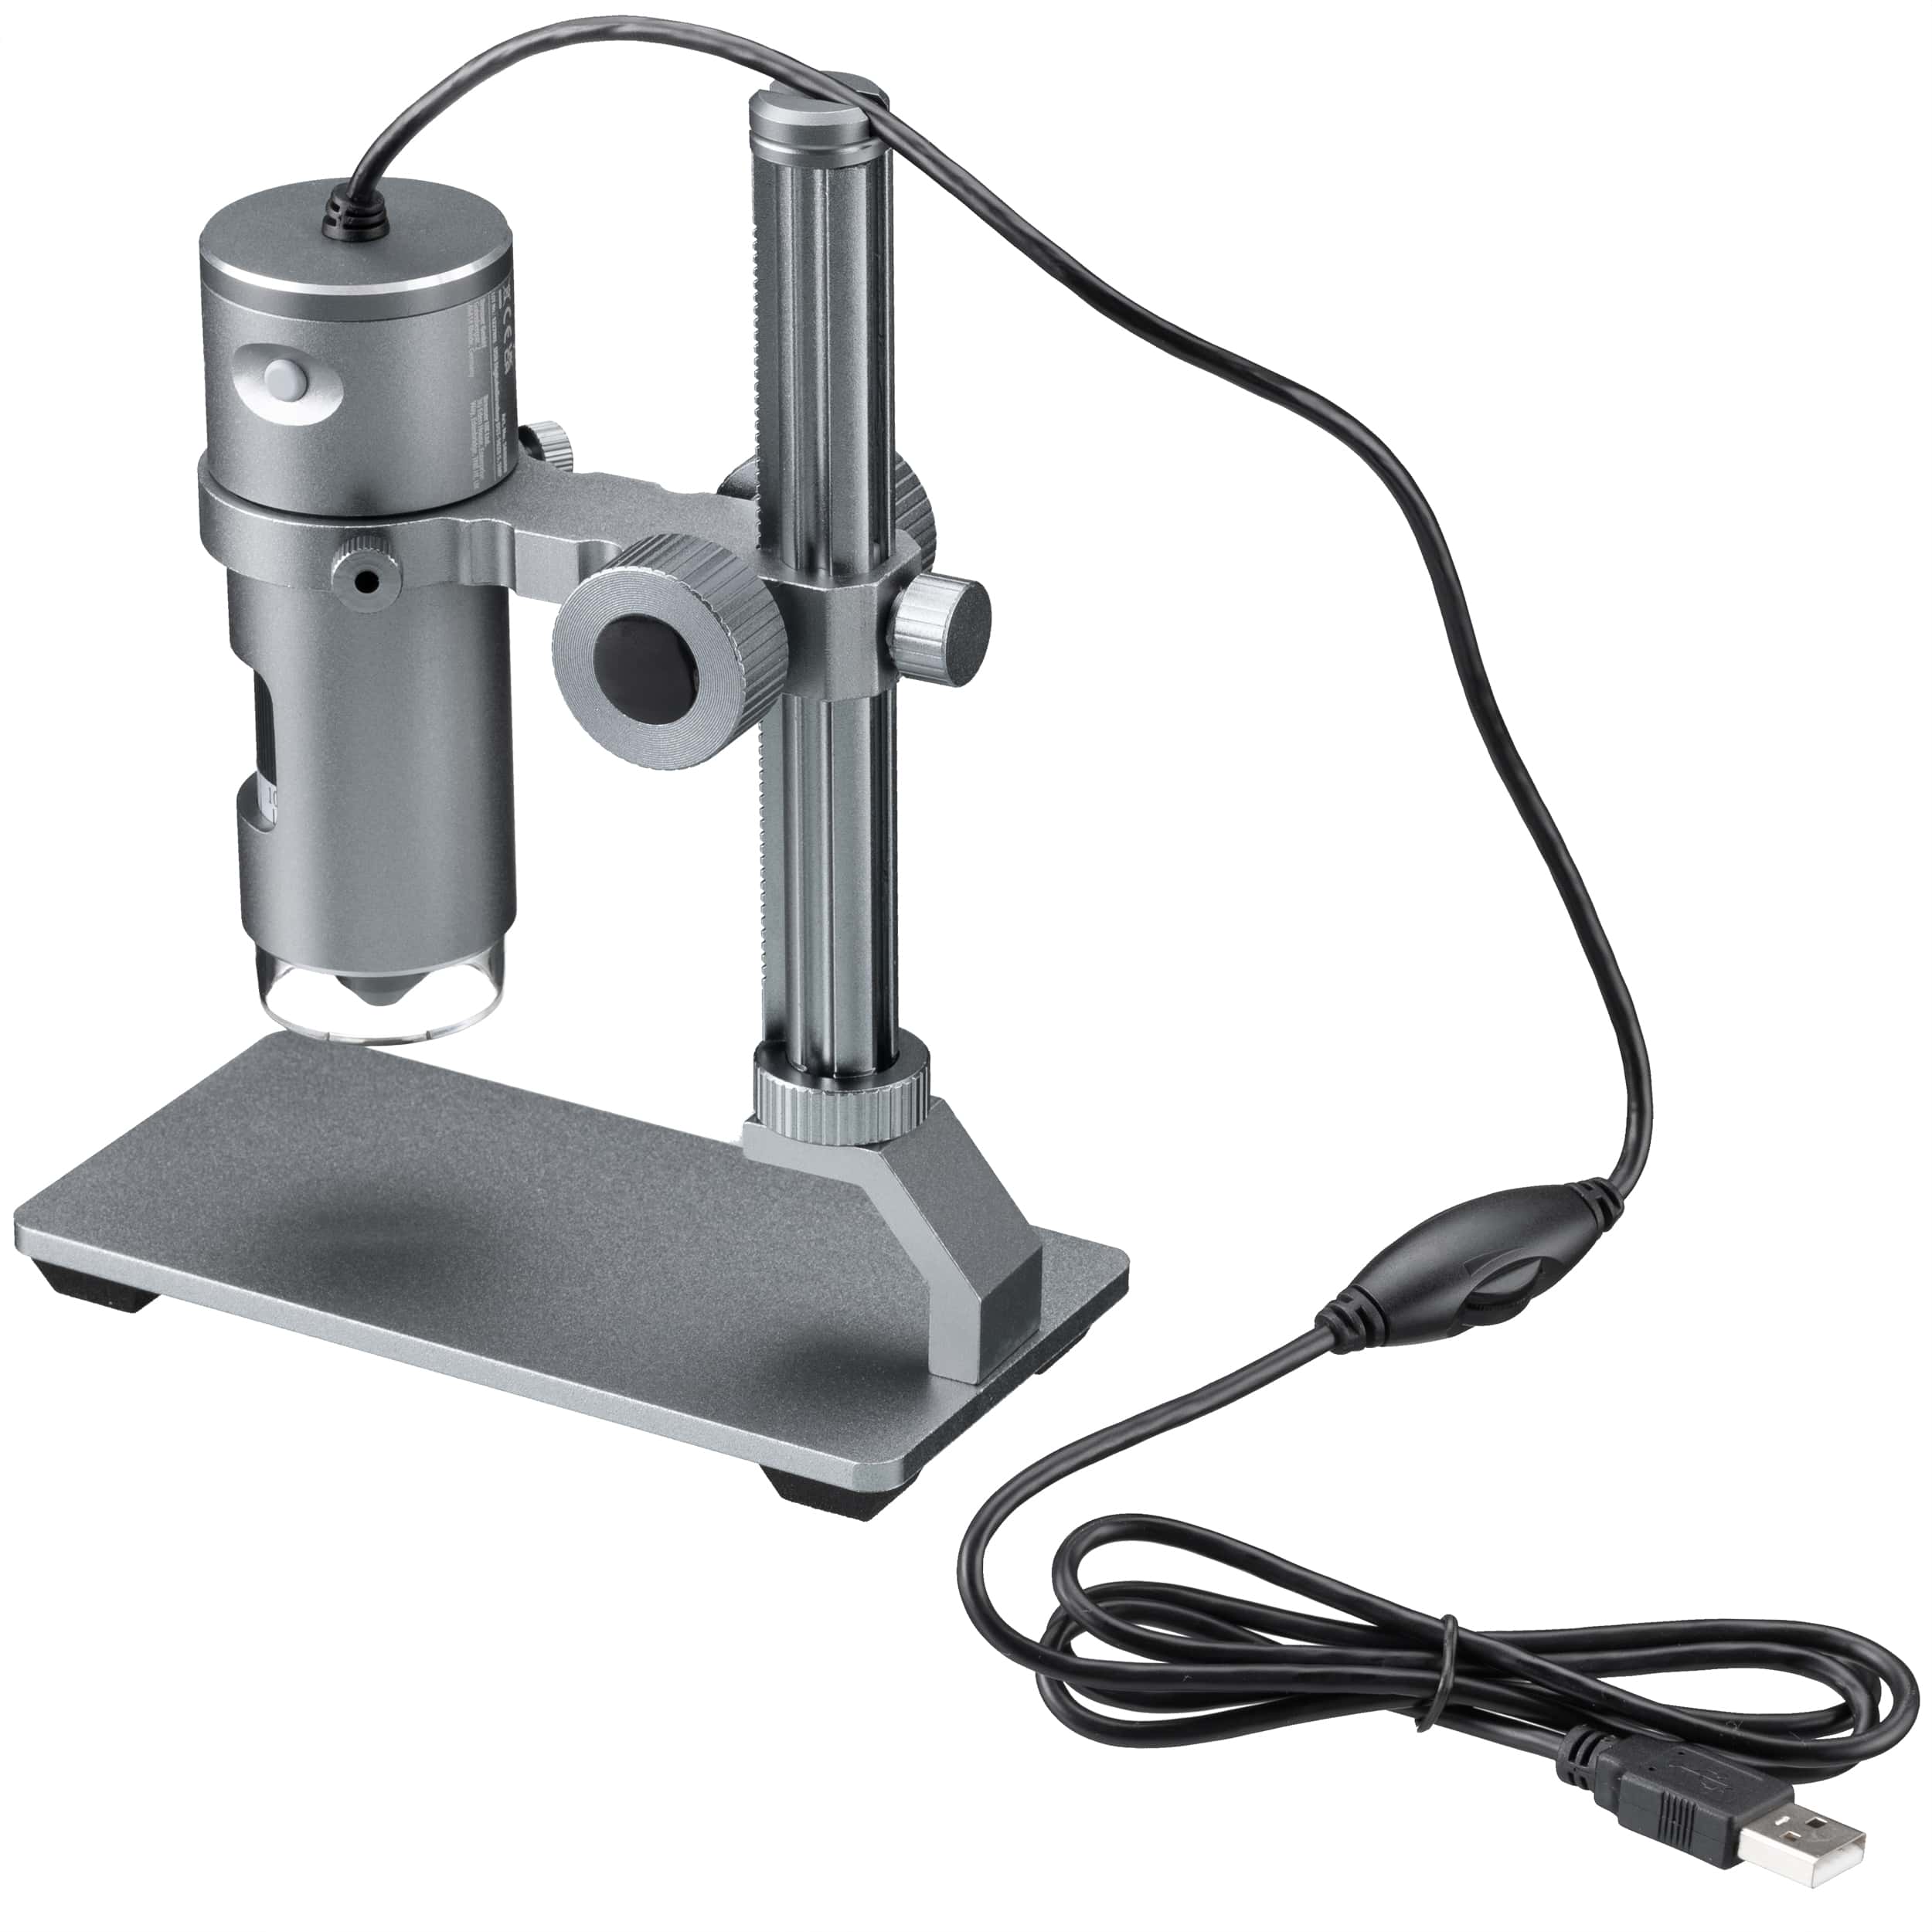 𝗧𝗦 𝗜𝘁𝗮𝗹𝗶𝗮 𝗔𝘀𝘁𝗿𝗼𝗻𝗼𝗺𝘆 - Microscopio digitale USB BRESSER  DST-1028 5.1MP - Bresser LLC